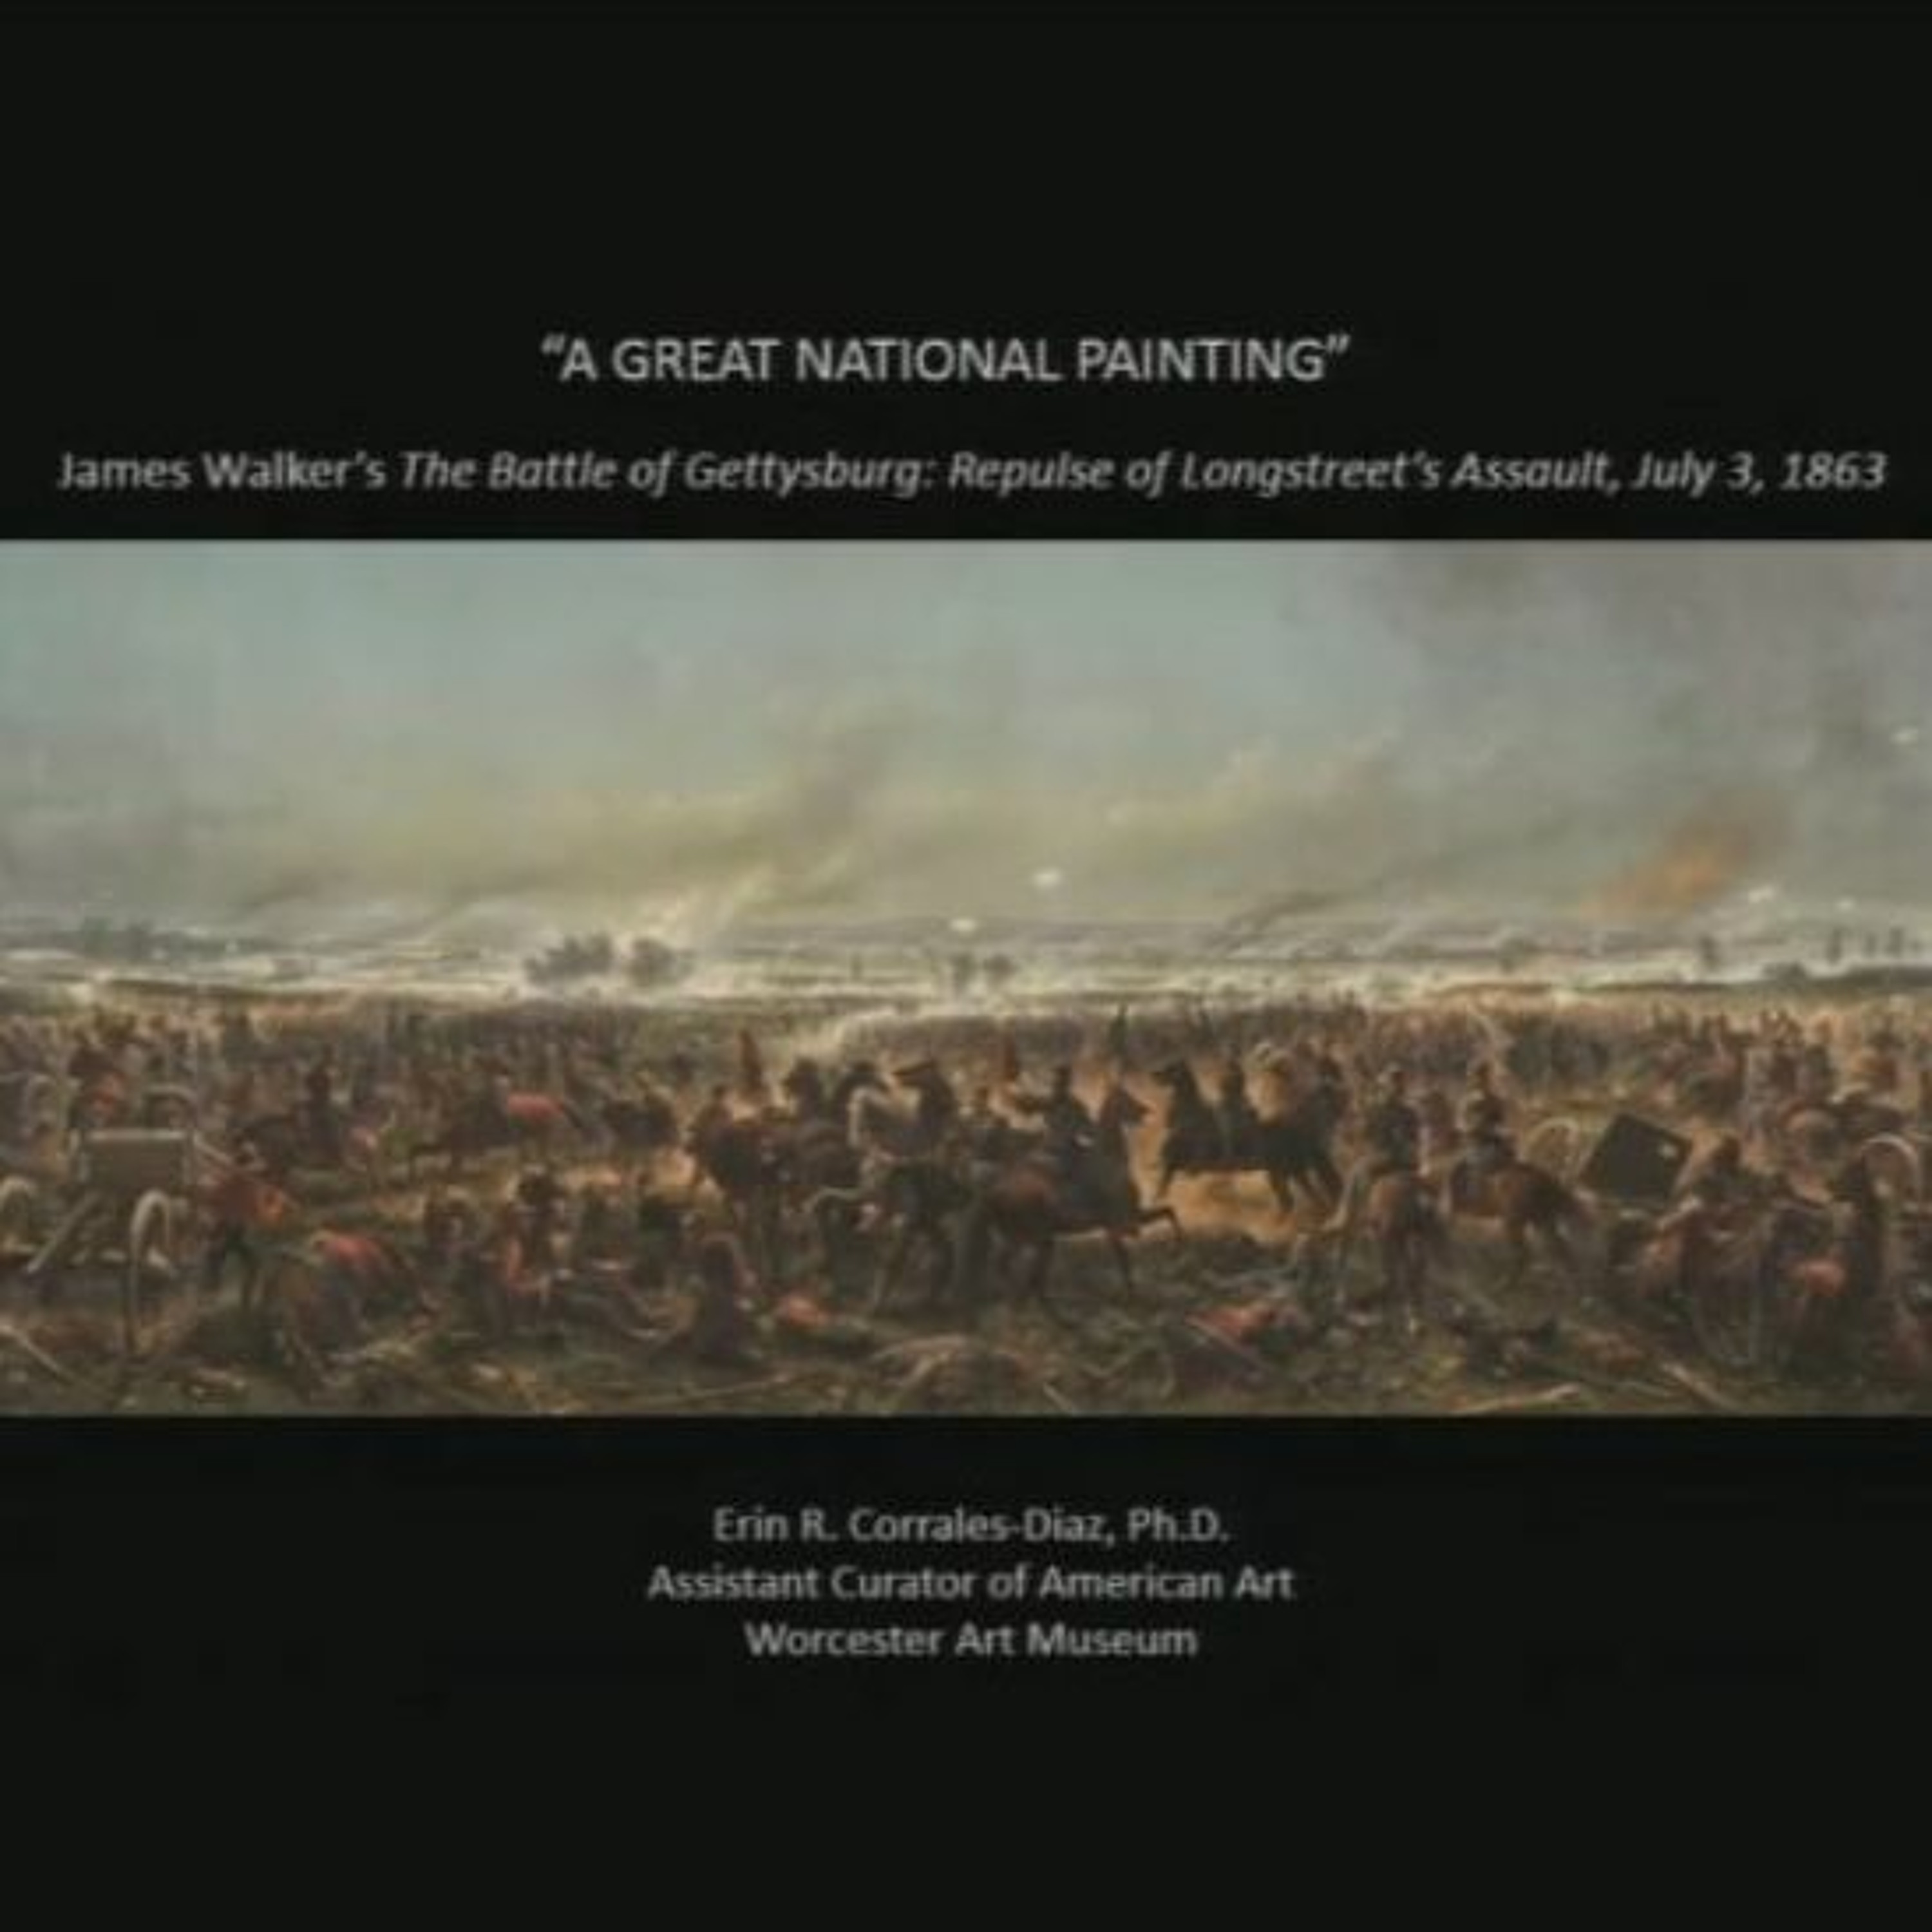 Erin Corrales-Diaz, “A Great National Painting: James Walker’s The Battle of Gettysburg